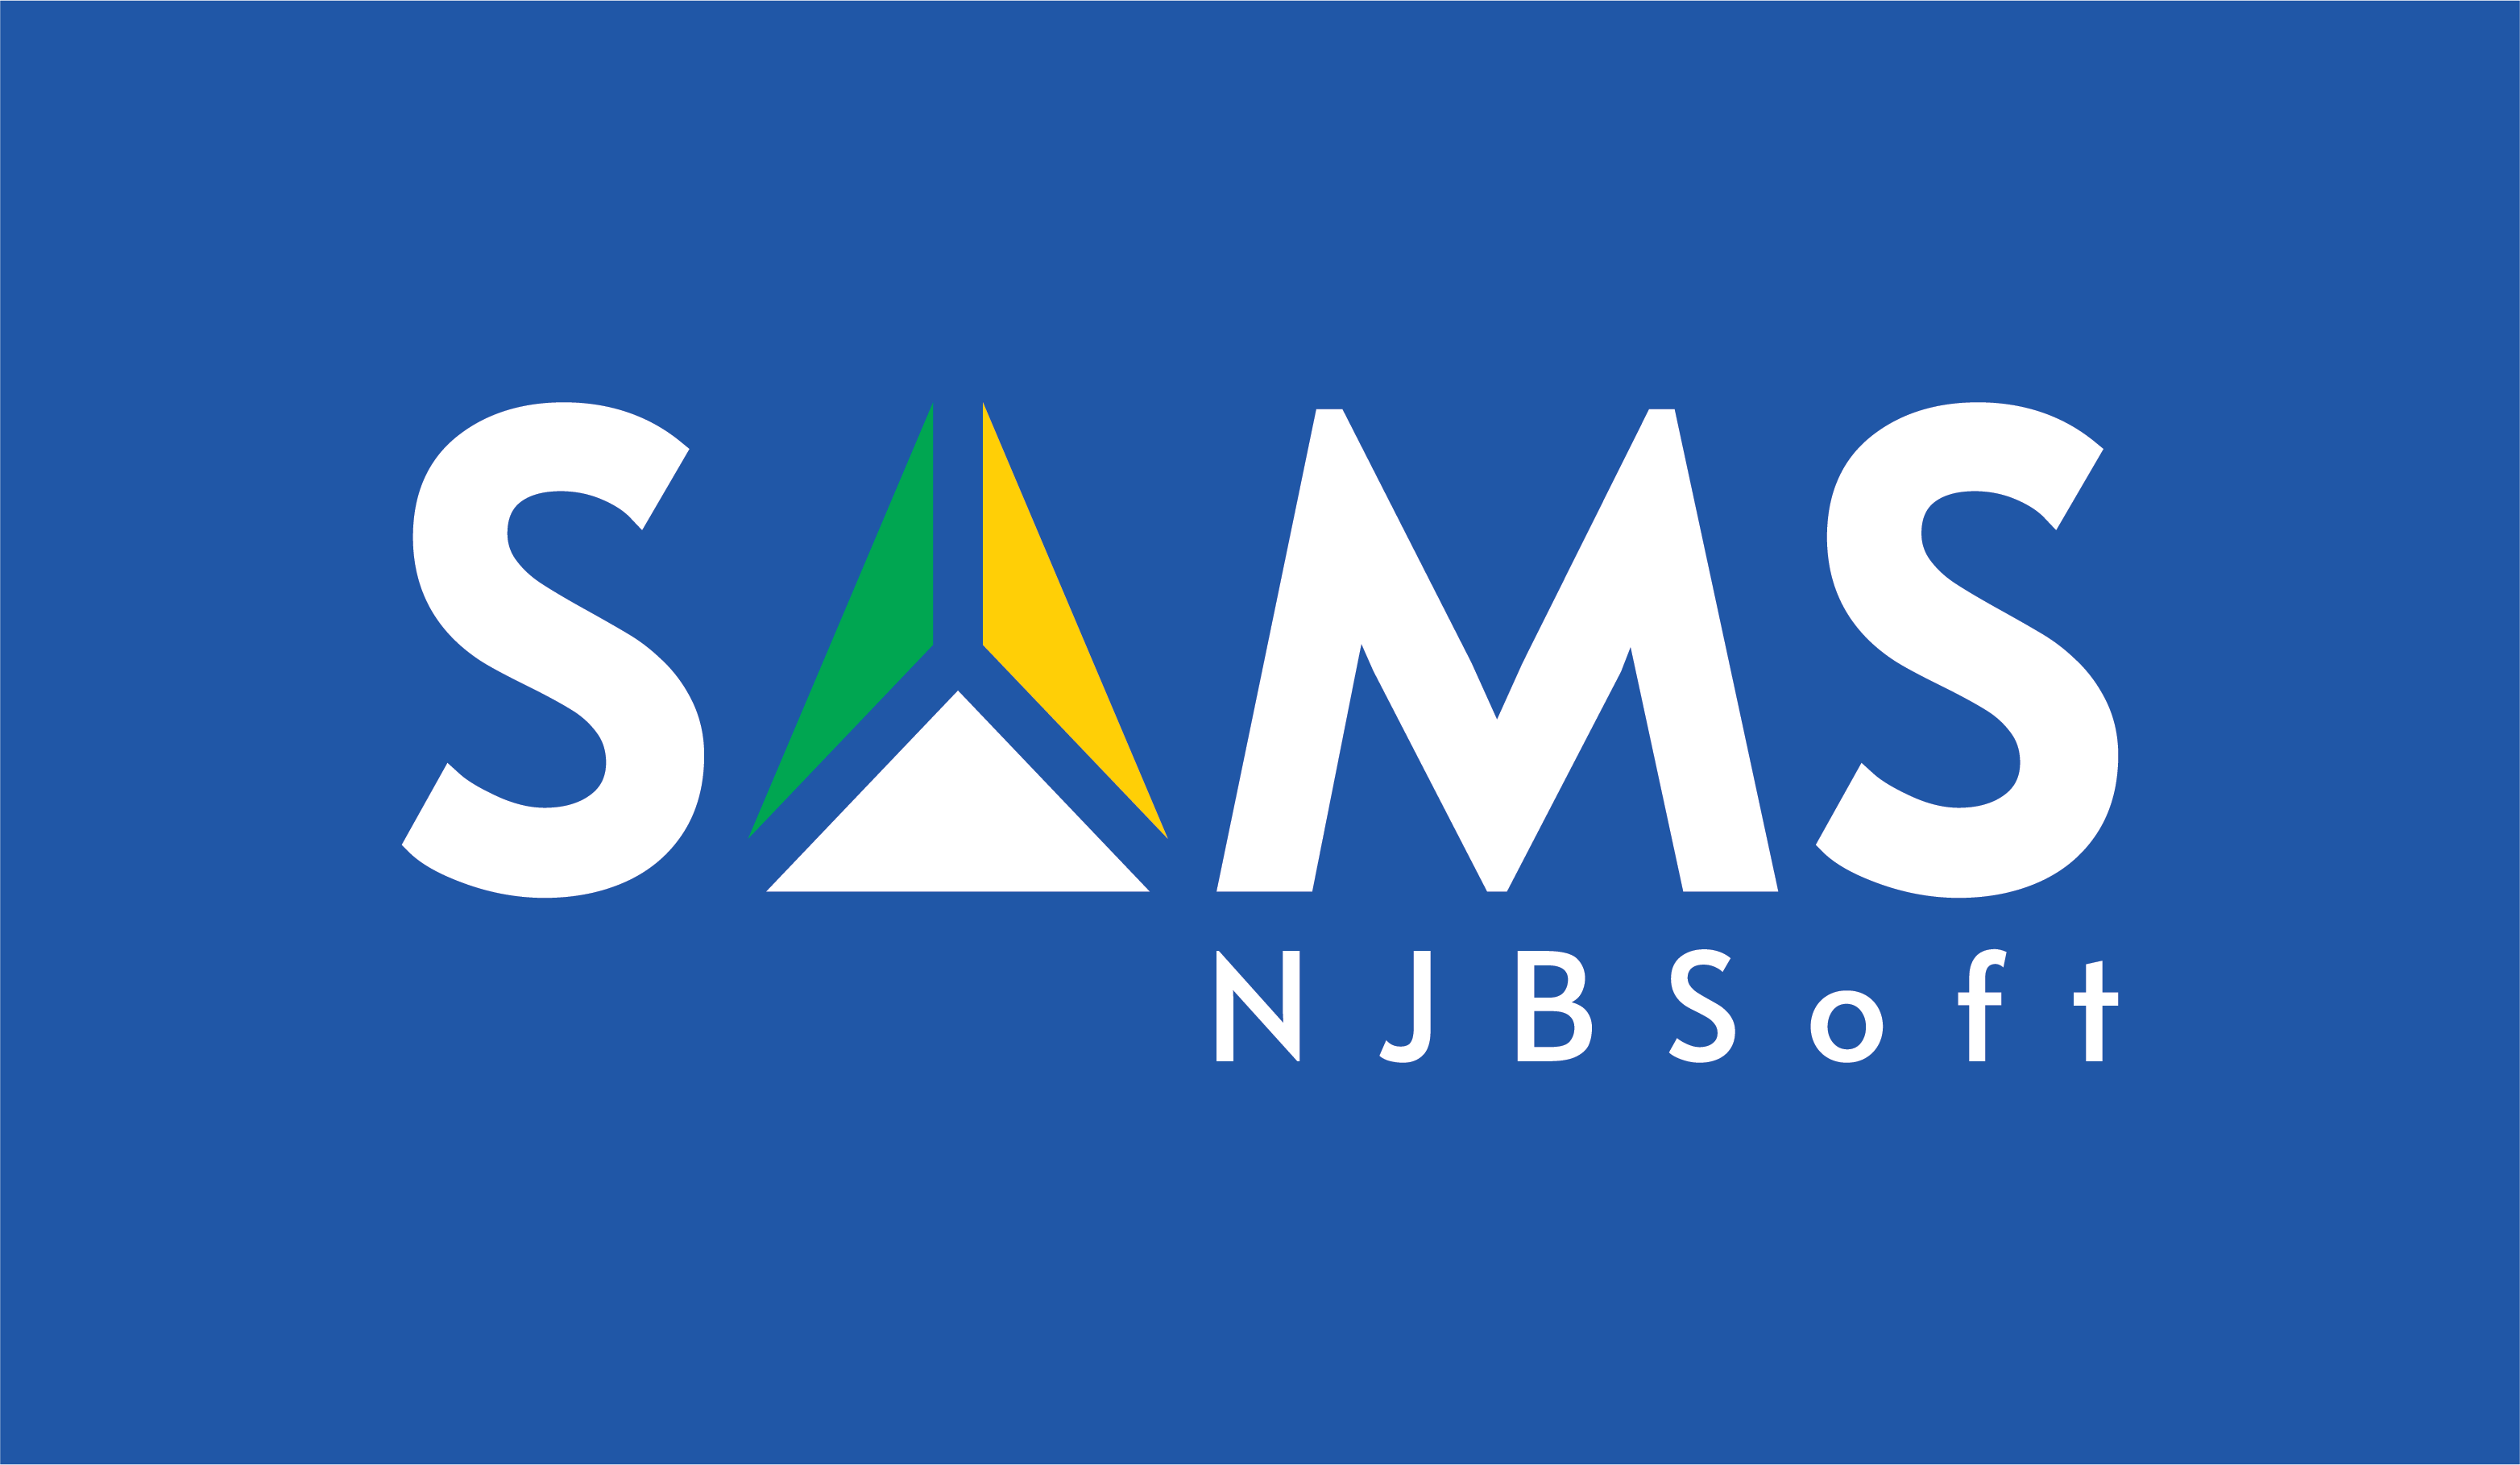 NJBSoft LLC